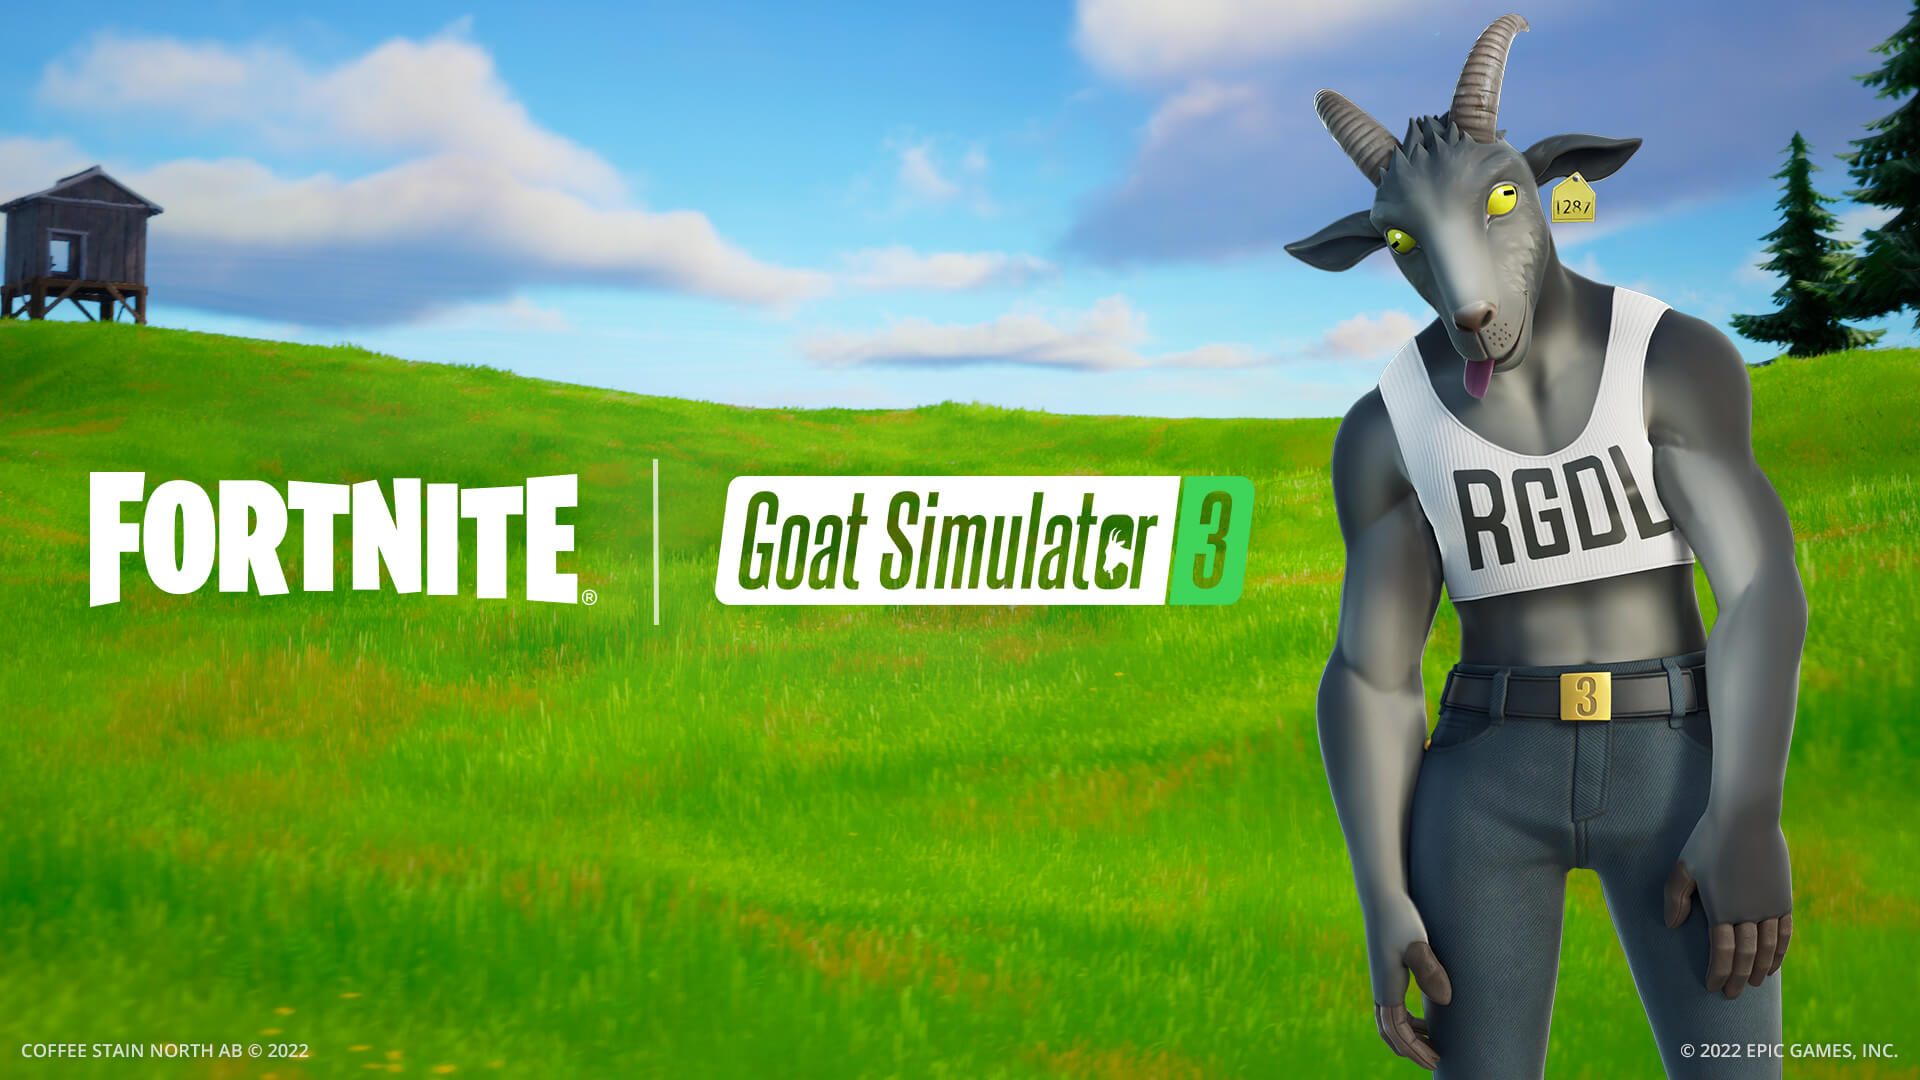 s-dan-f-r-du-goat-simulator-3-skindet-i-fortnite-creo-gaming